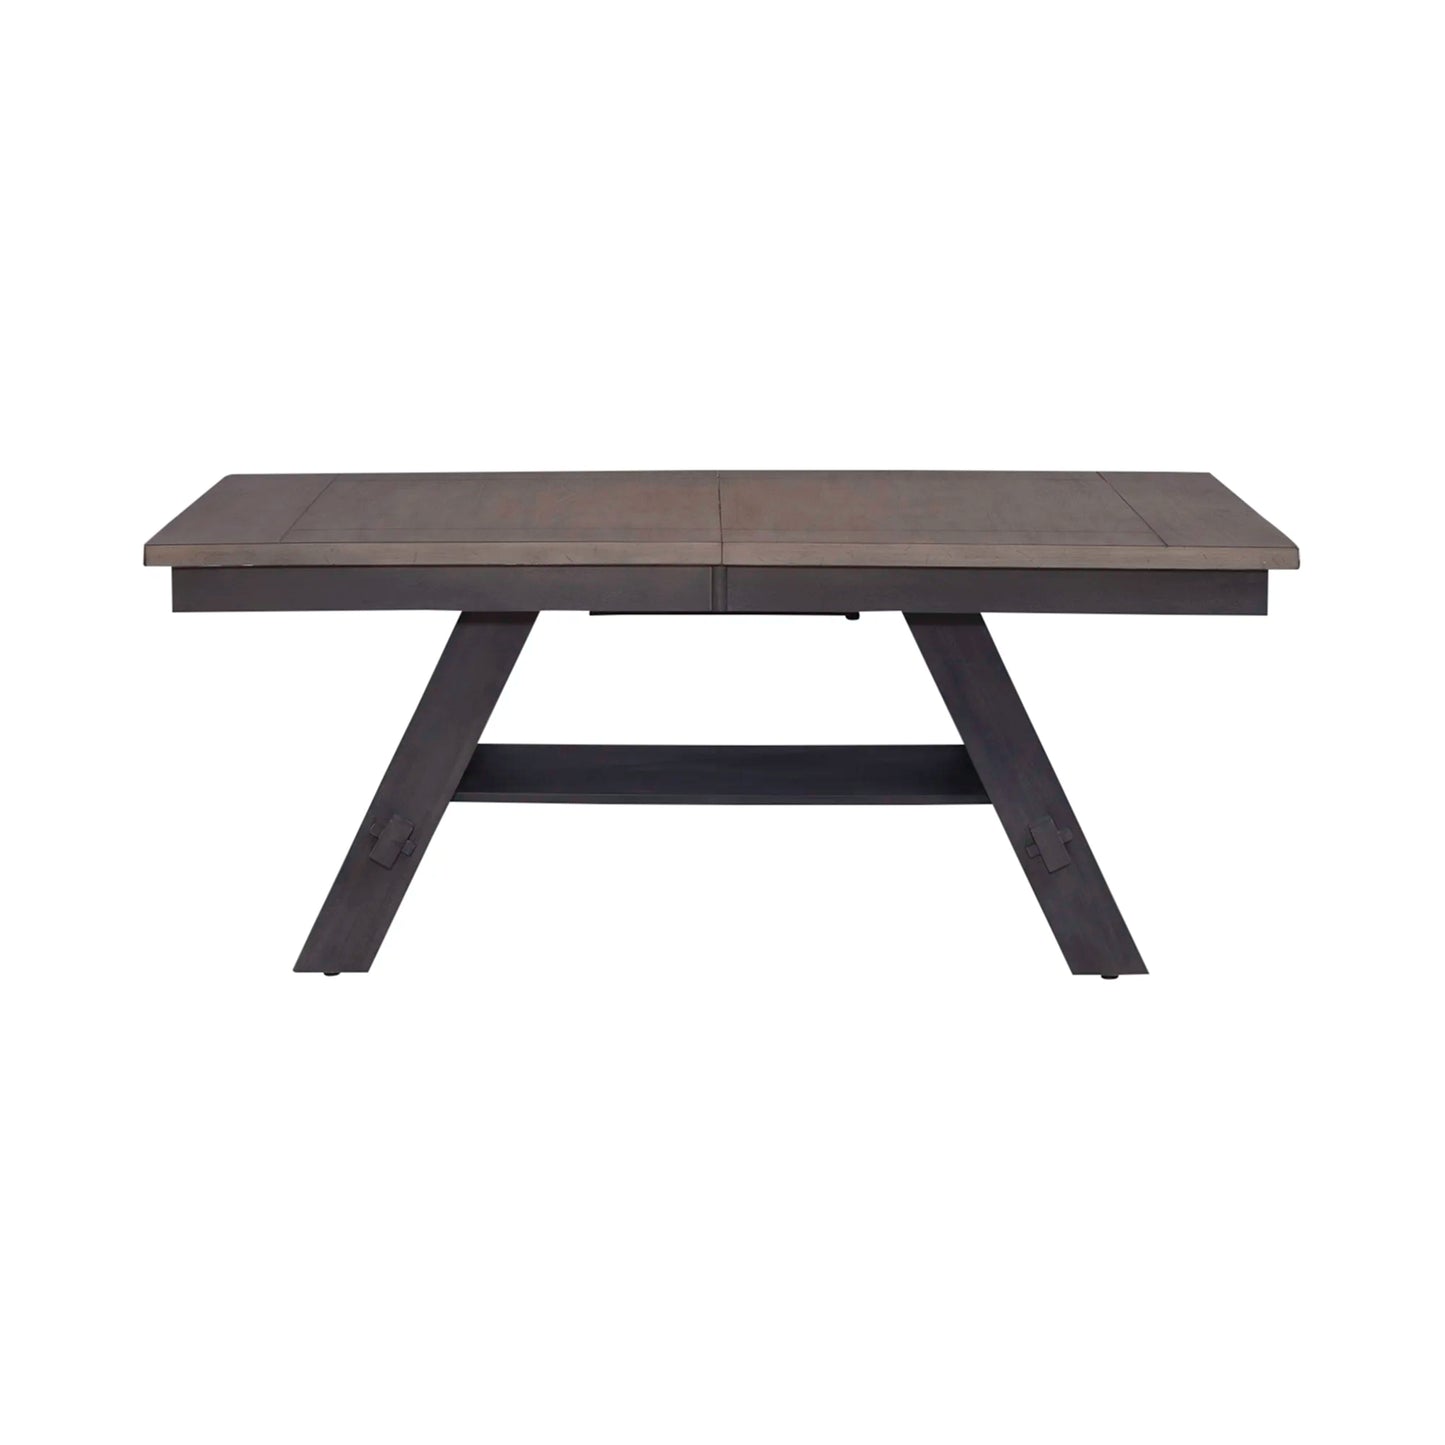 Lawson - Pedestal Table Set - Dark Gray 1